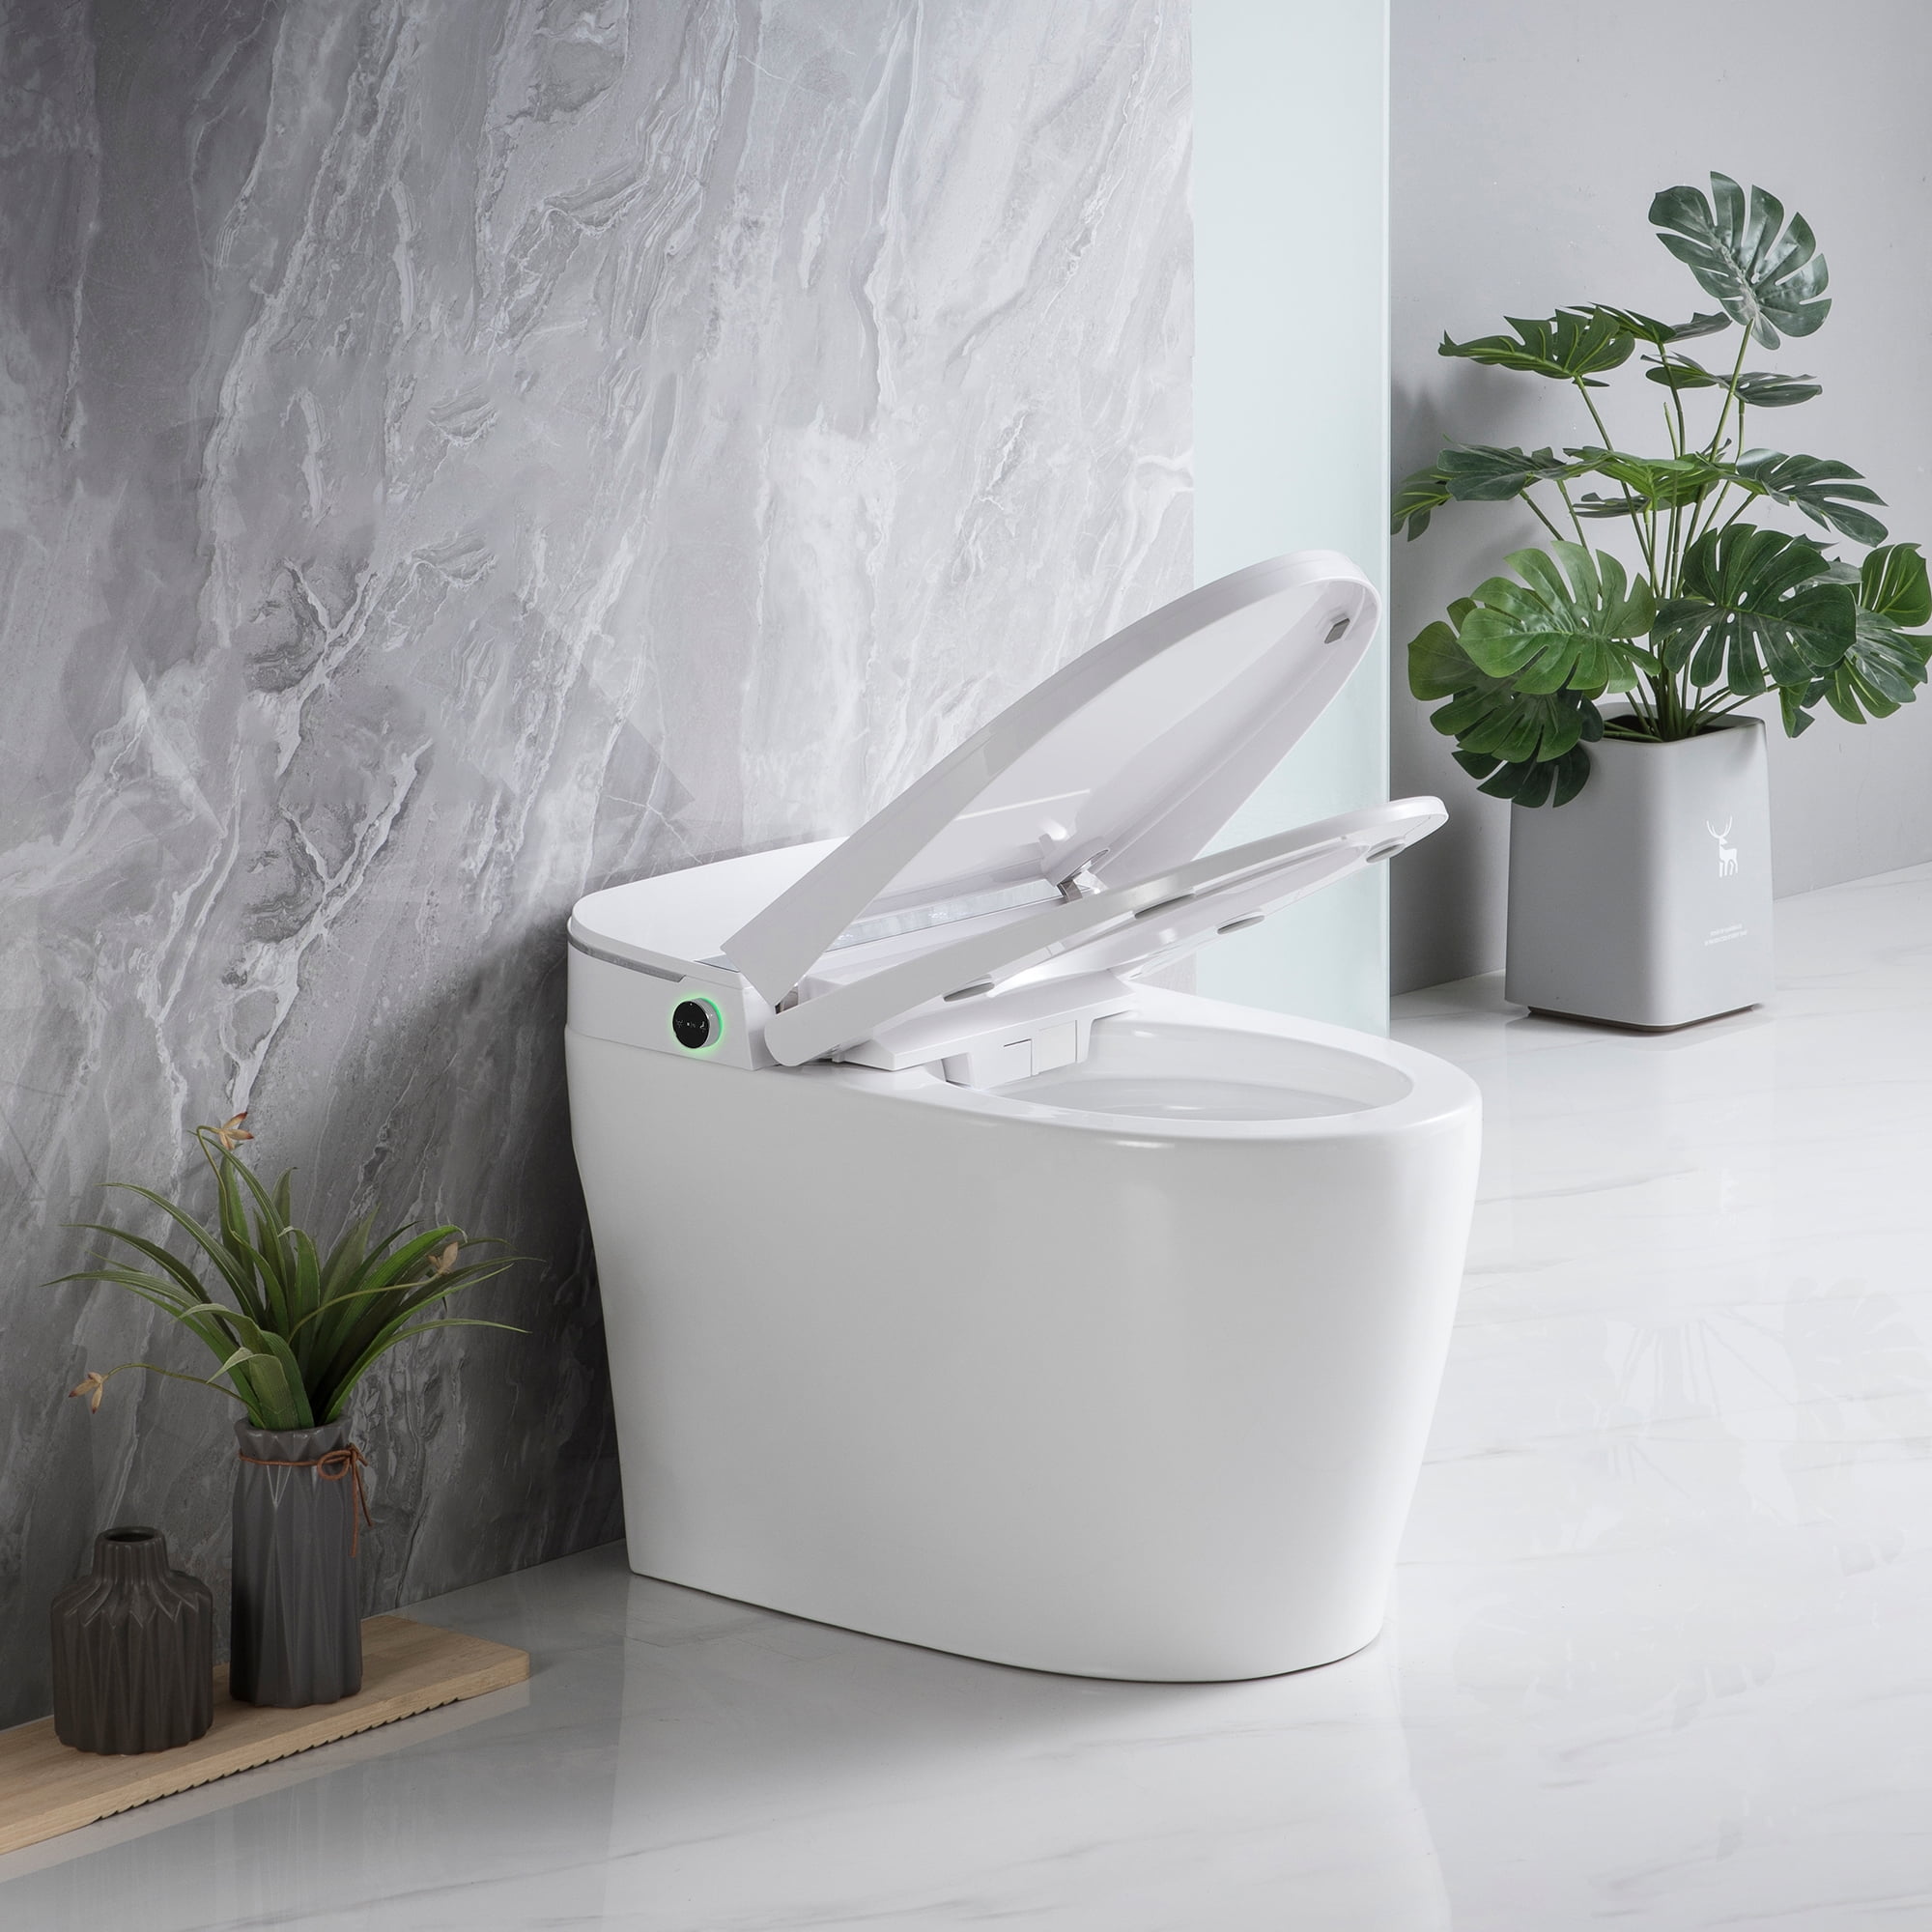 UKEEP Elongated one-piece Smart Toilet with Advance Bidet And Soft Closing  Seat, Auto Dual Flush, UV-LED Sterilization, Heated Seat, Warm Water and  Dry 